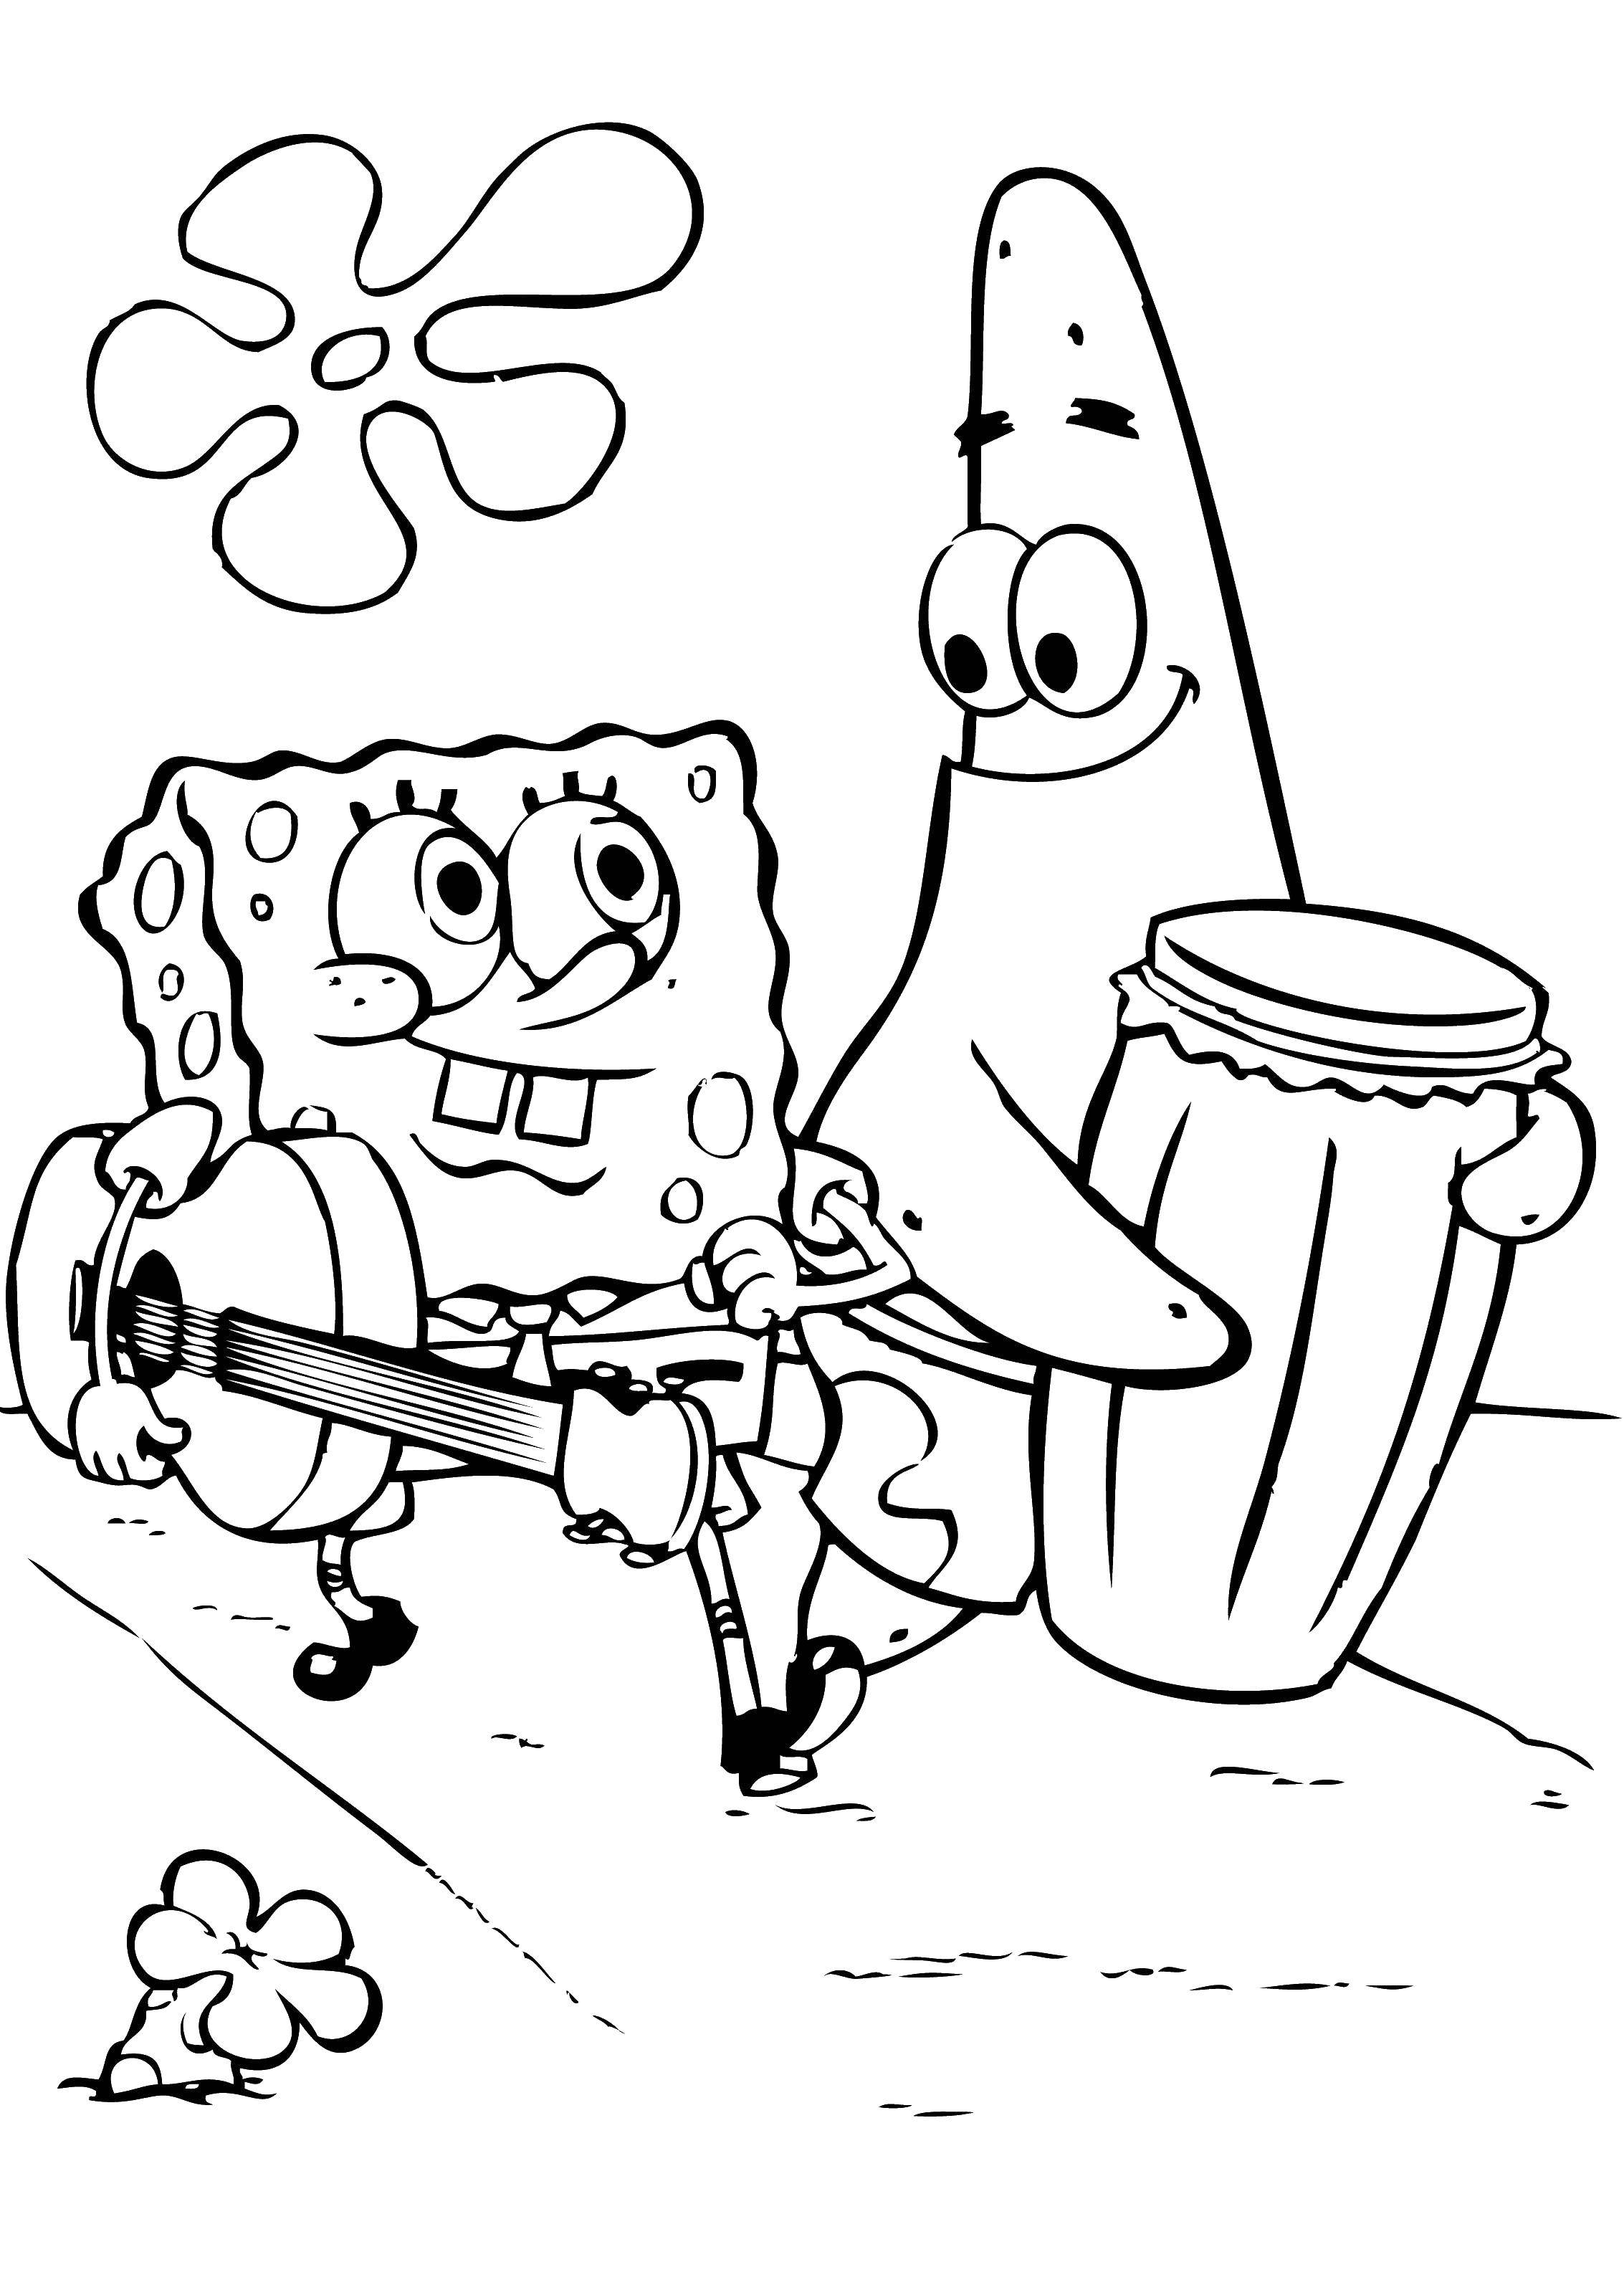 Coloring Spongebob and Patrick with musical instruments. Category Spongebob. Tags:  cartoons, spongebob, Patrick.